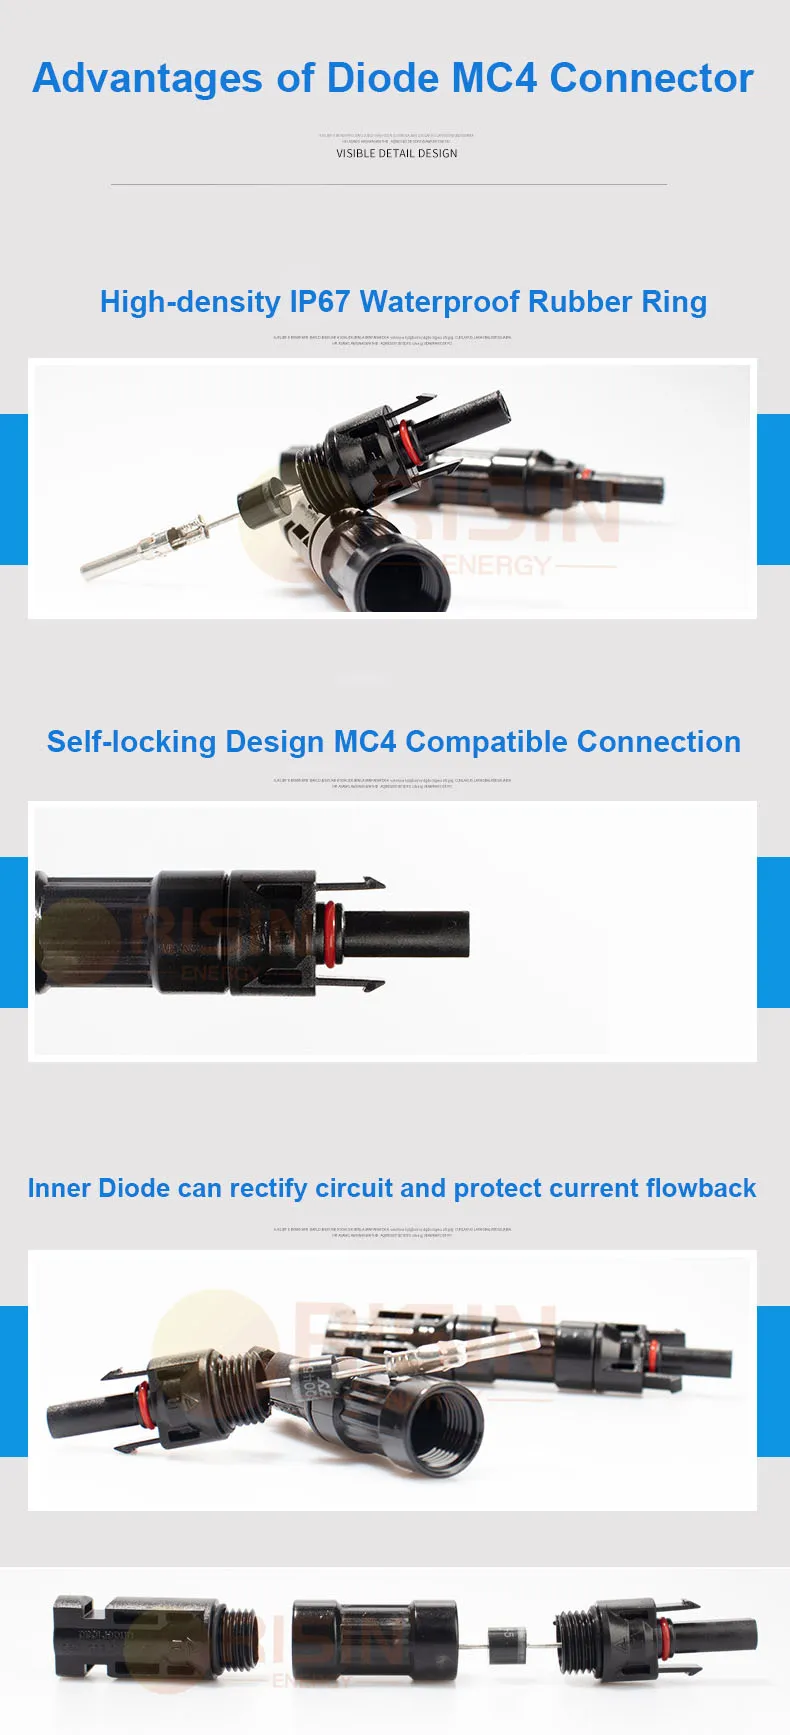 Diode MC4 benefits.jpg